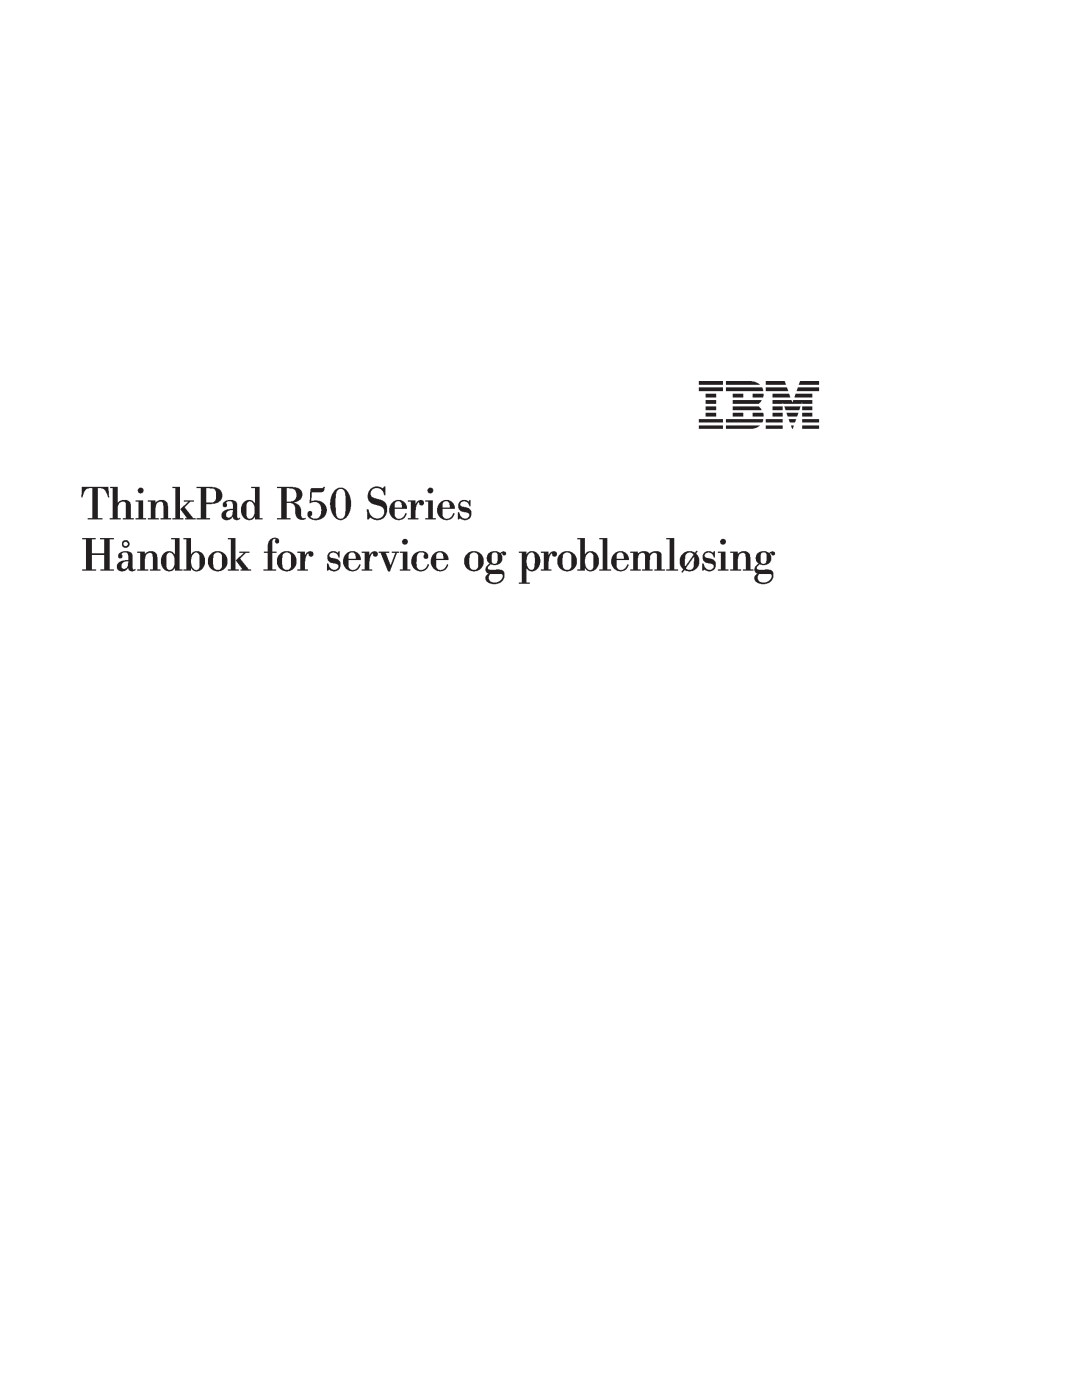 IBM manual ThinkPad R50 Series, Håndbok for service og problemløsing 